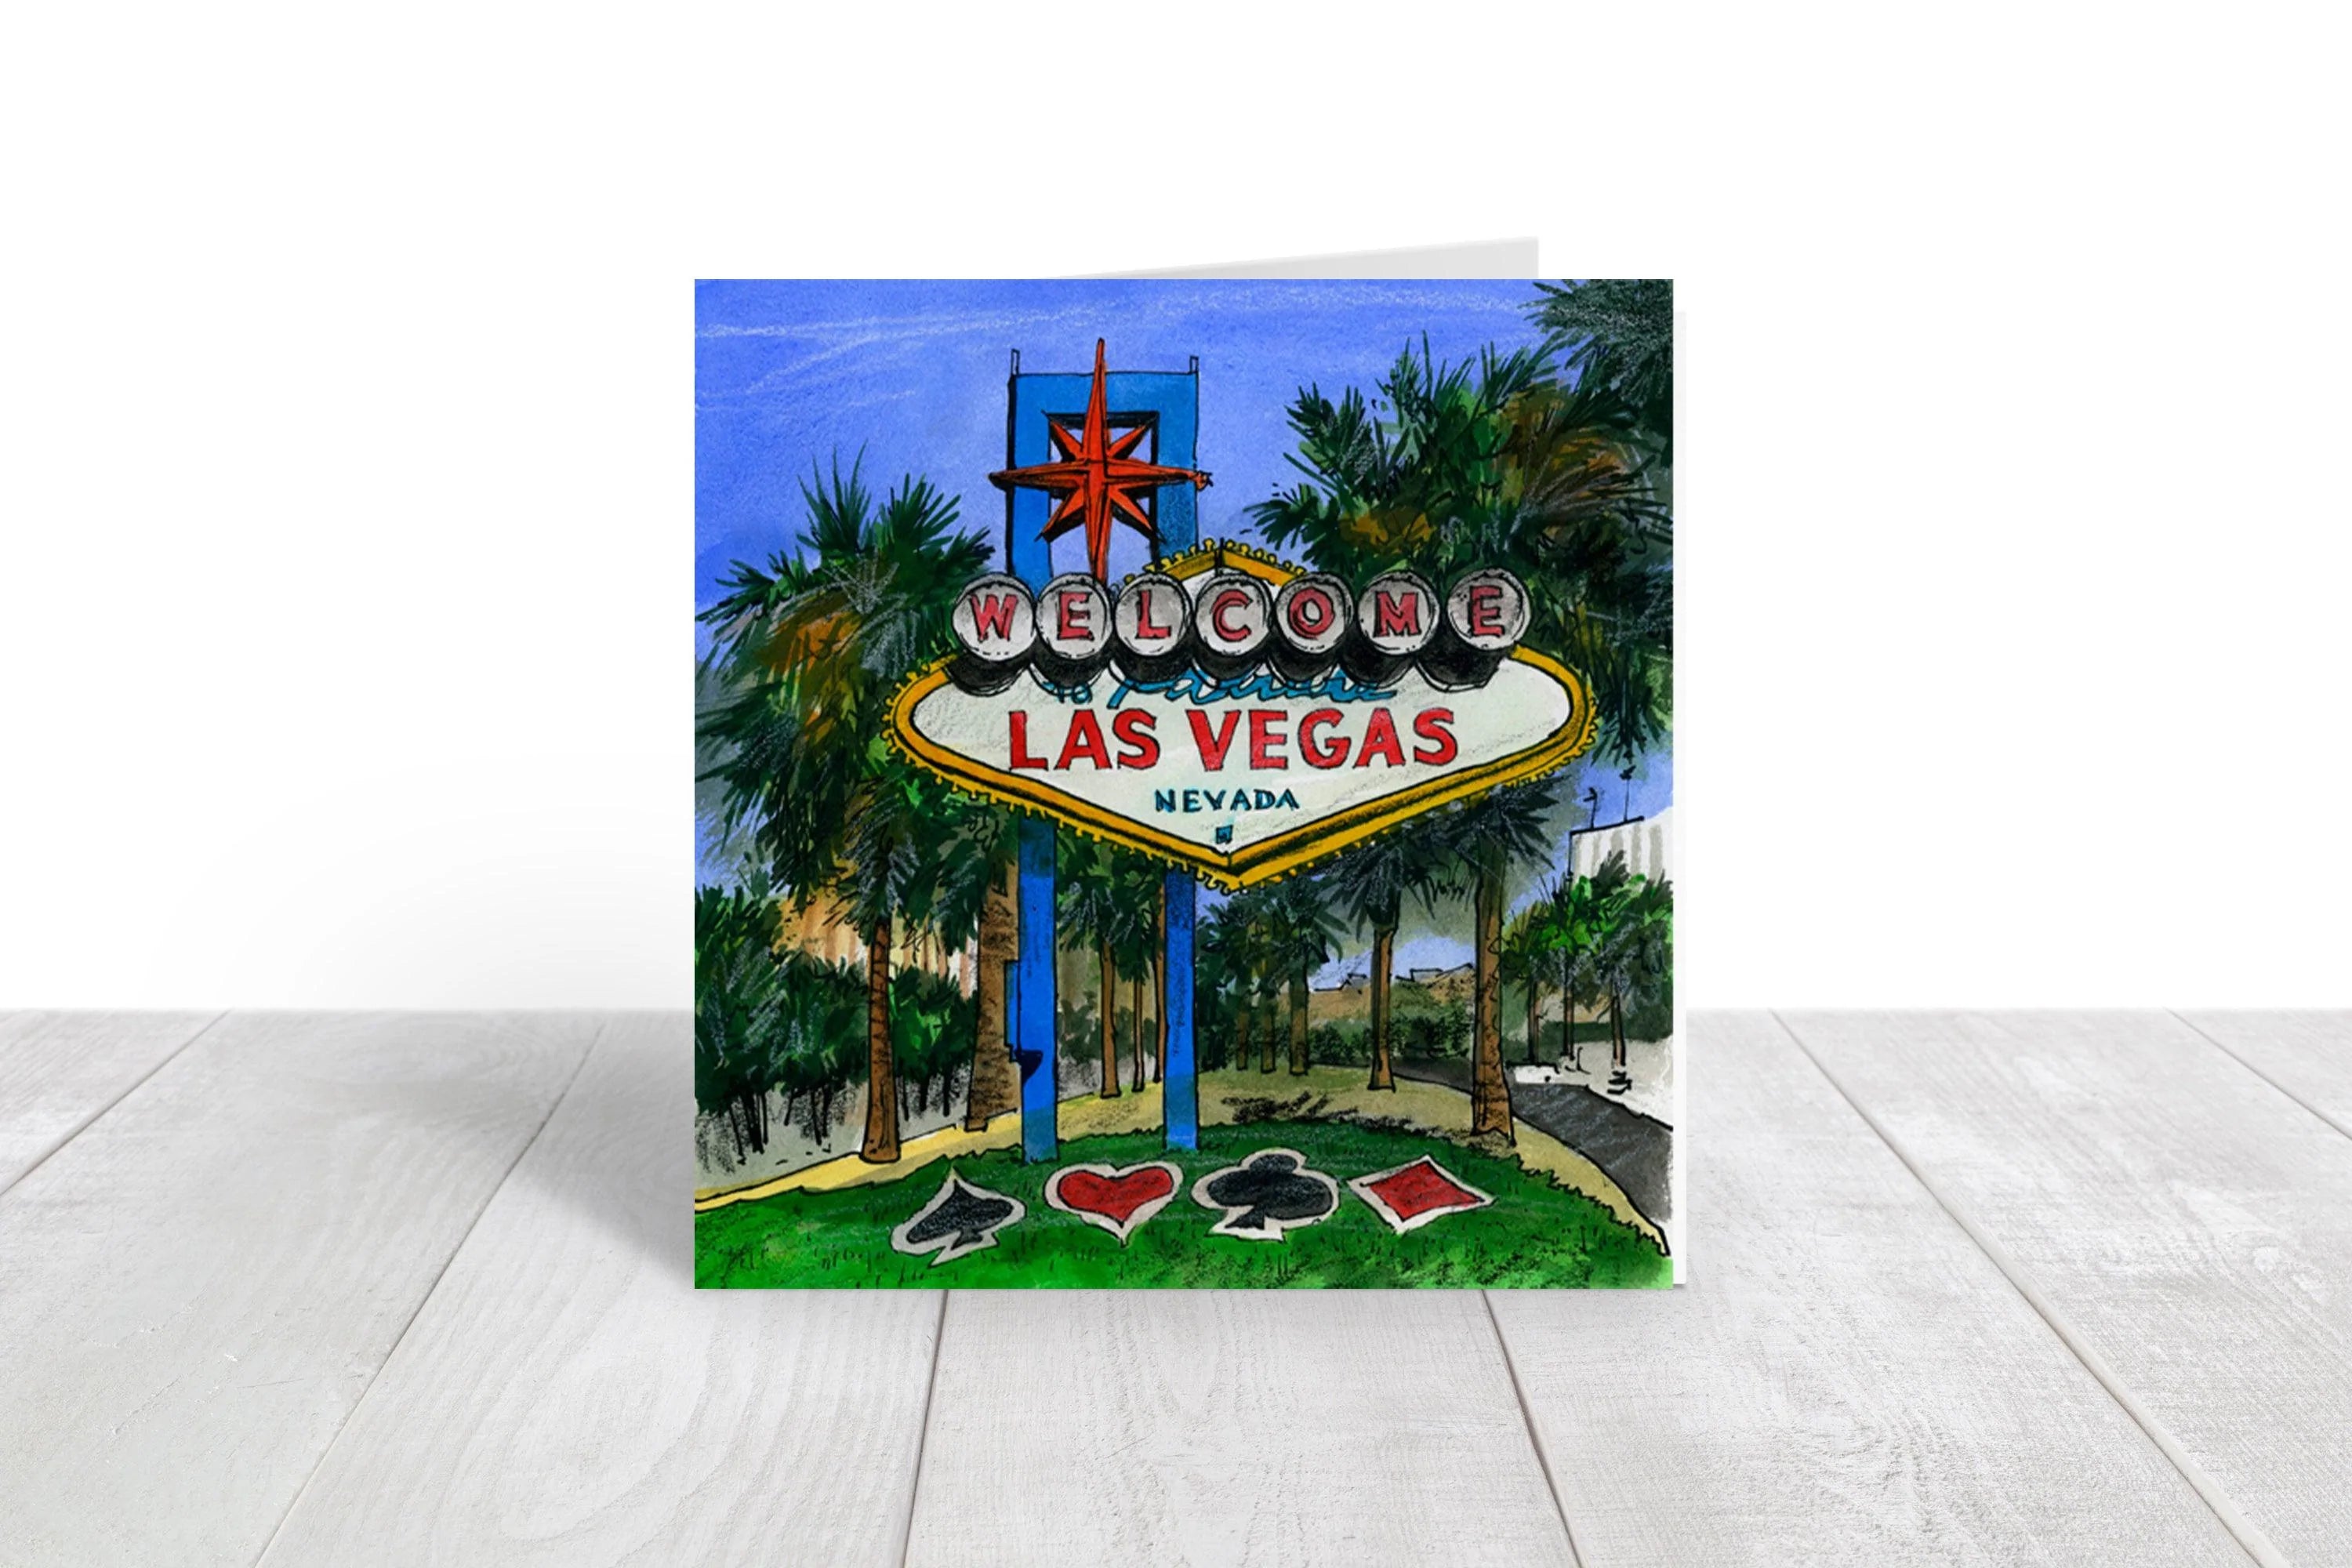 Las Vegas, Nevada, U.S.A Notecard | Totally Toronto Art Inc. 